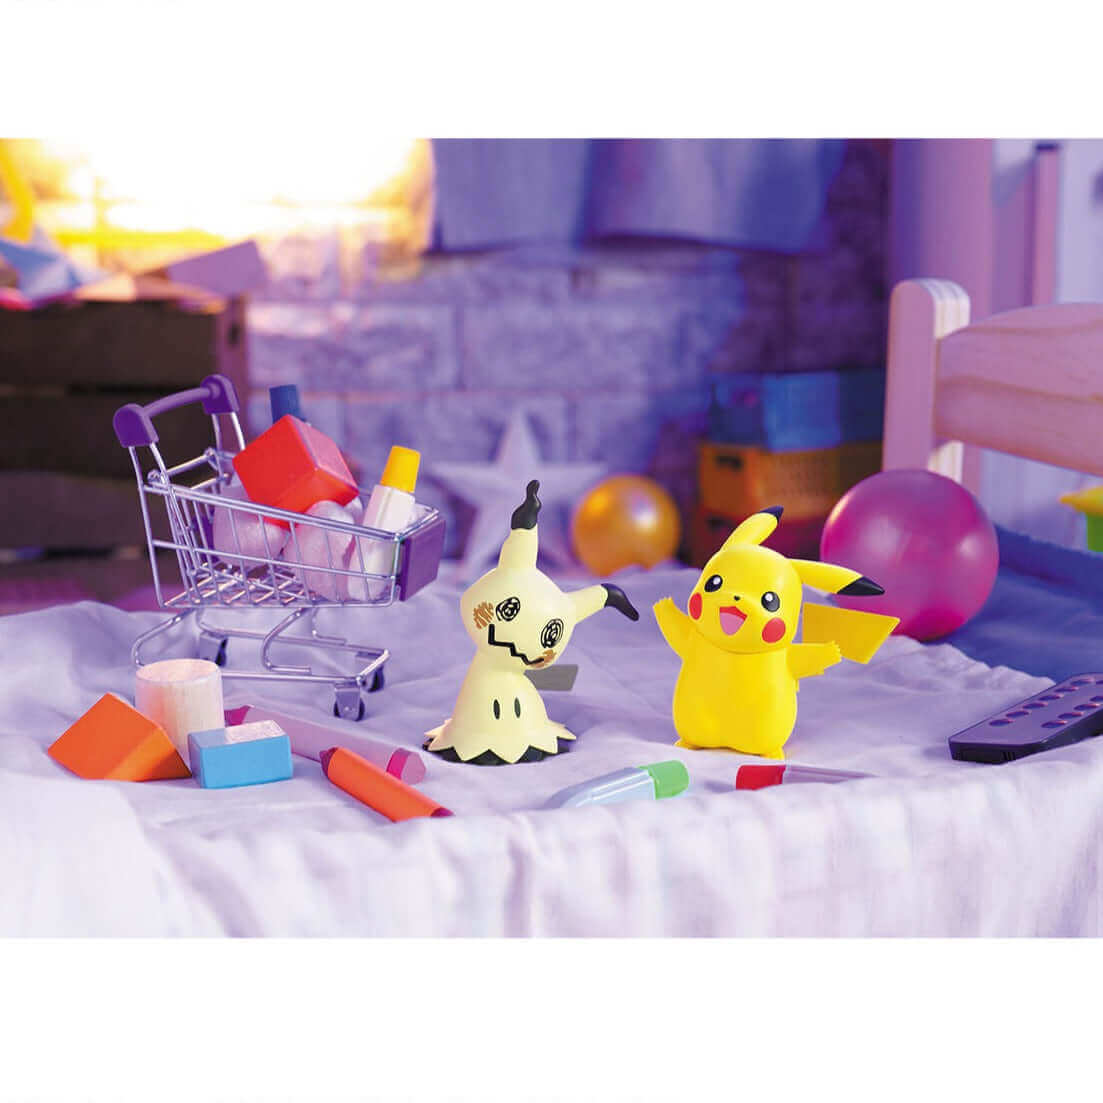 08 Mimikyu Model kit - Pokémon Plamo Quick! Collection - konbinistop